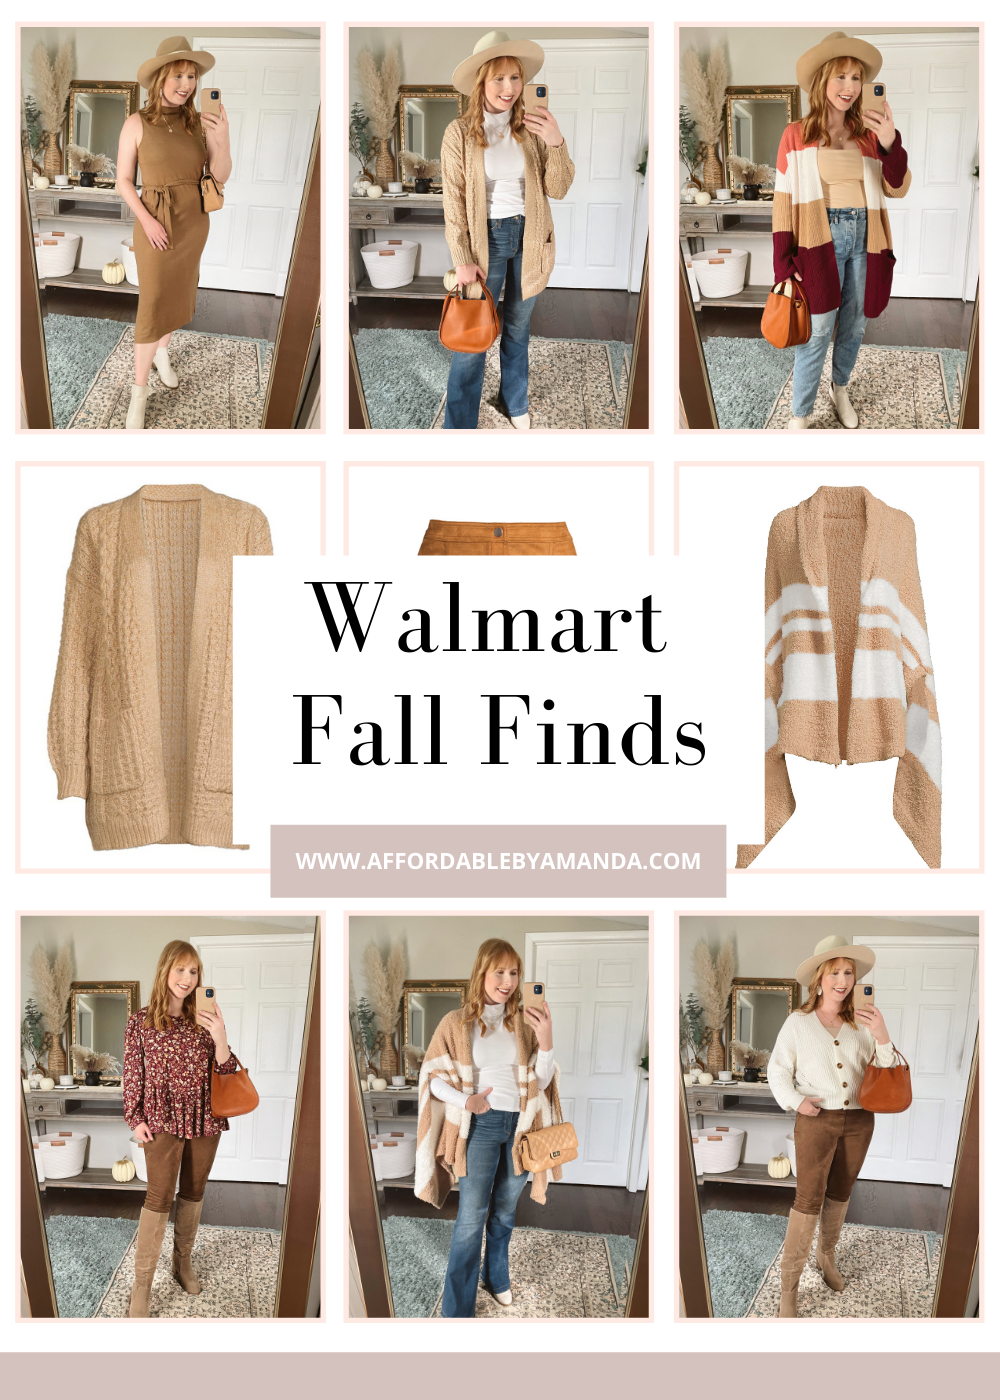 Walmart fashion Great no boundaries pants!